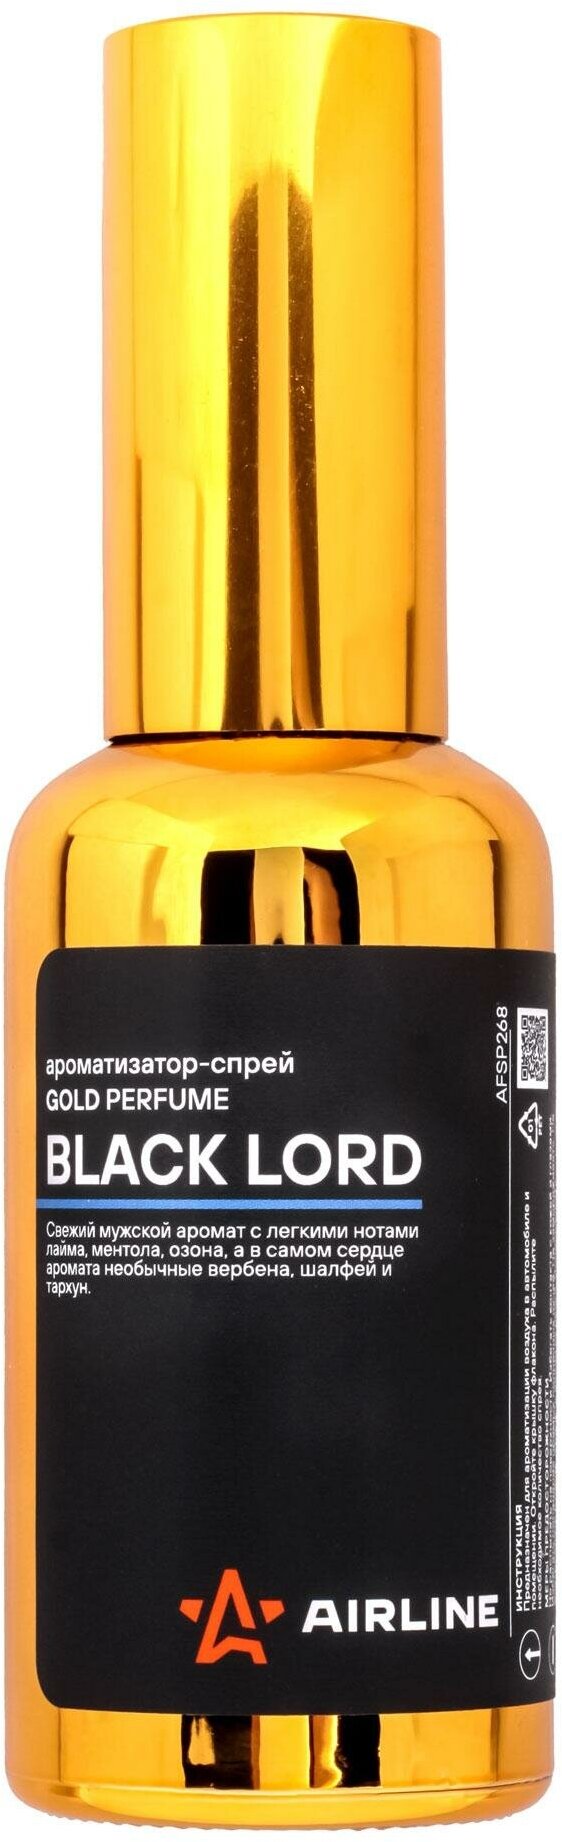 Ароматизатор-спрей "GOLD" Perfume BLACK LORD 50мл AIRLINE - фото №3